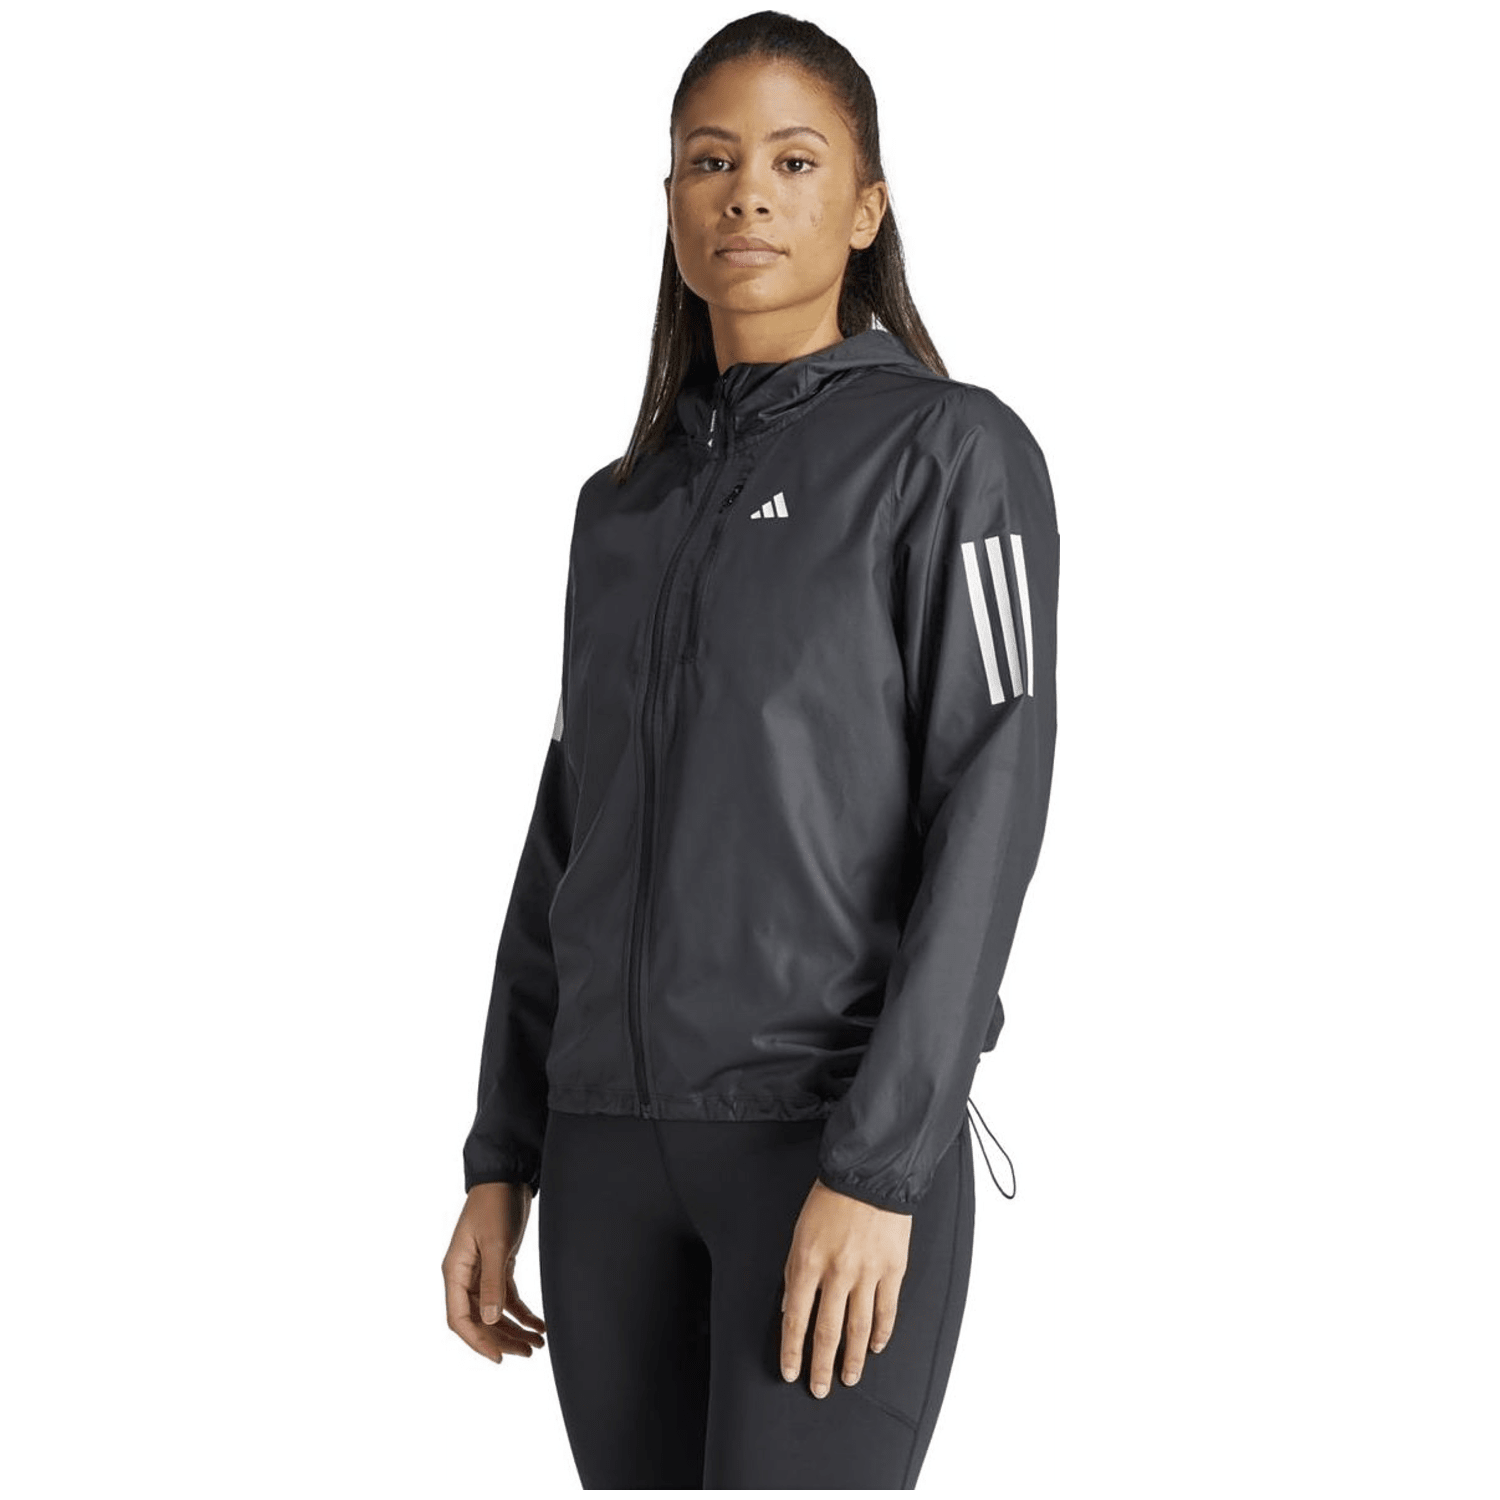 Adidas Own The Run Jacke Damen